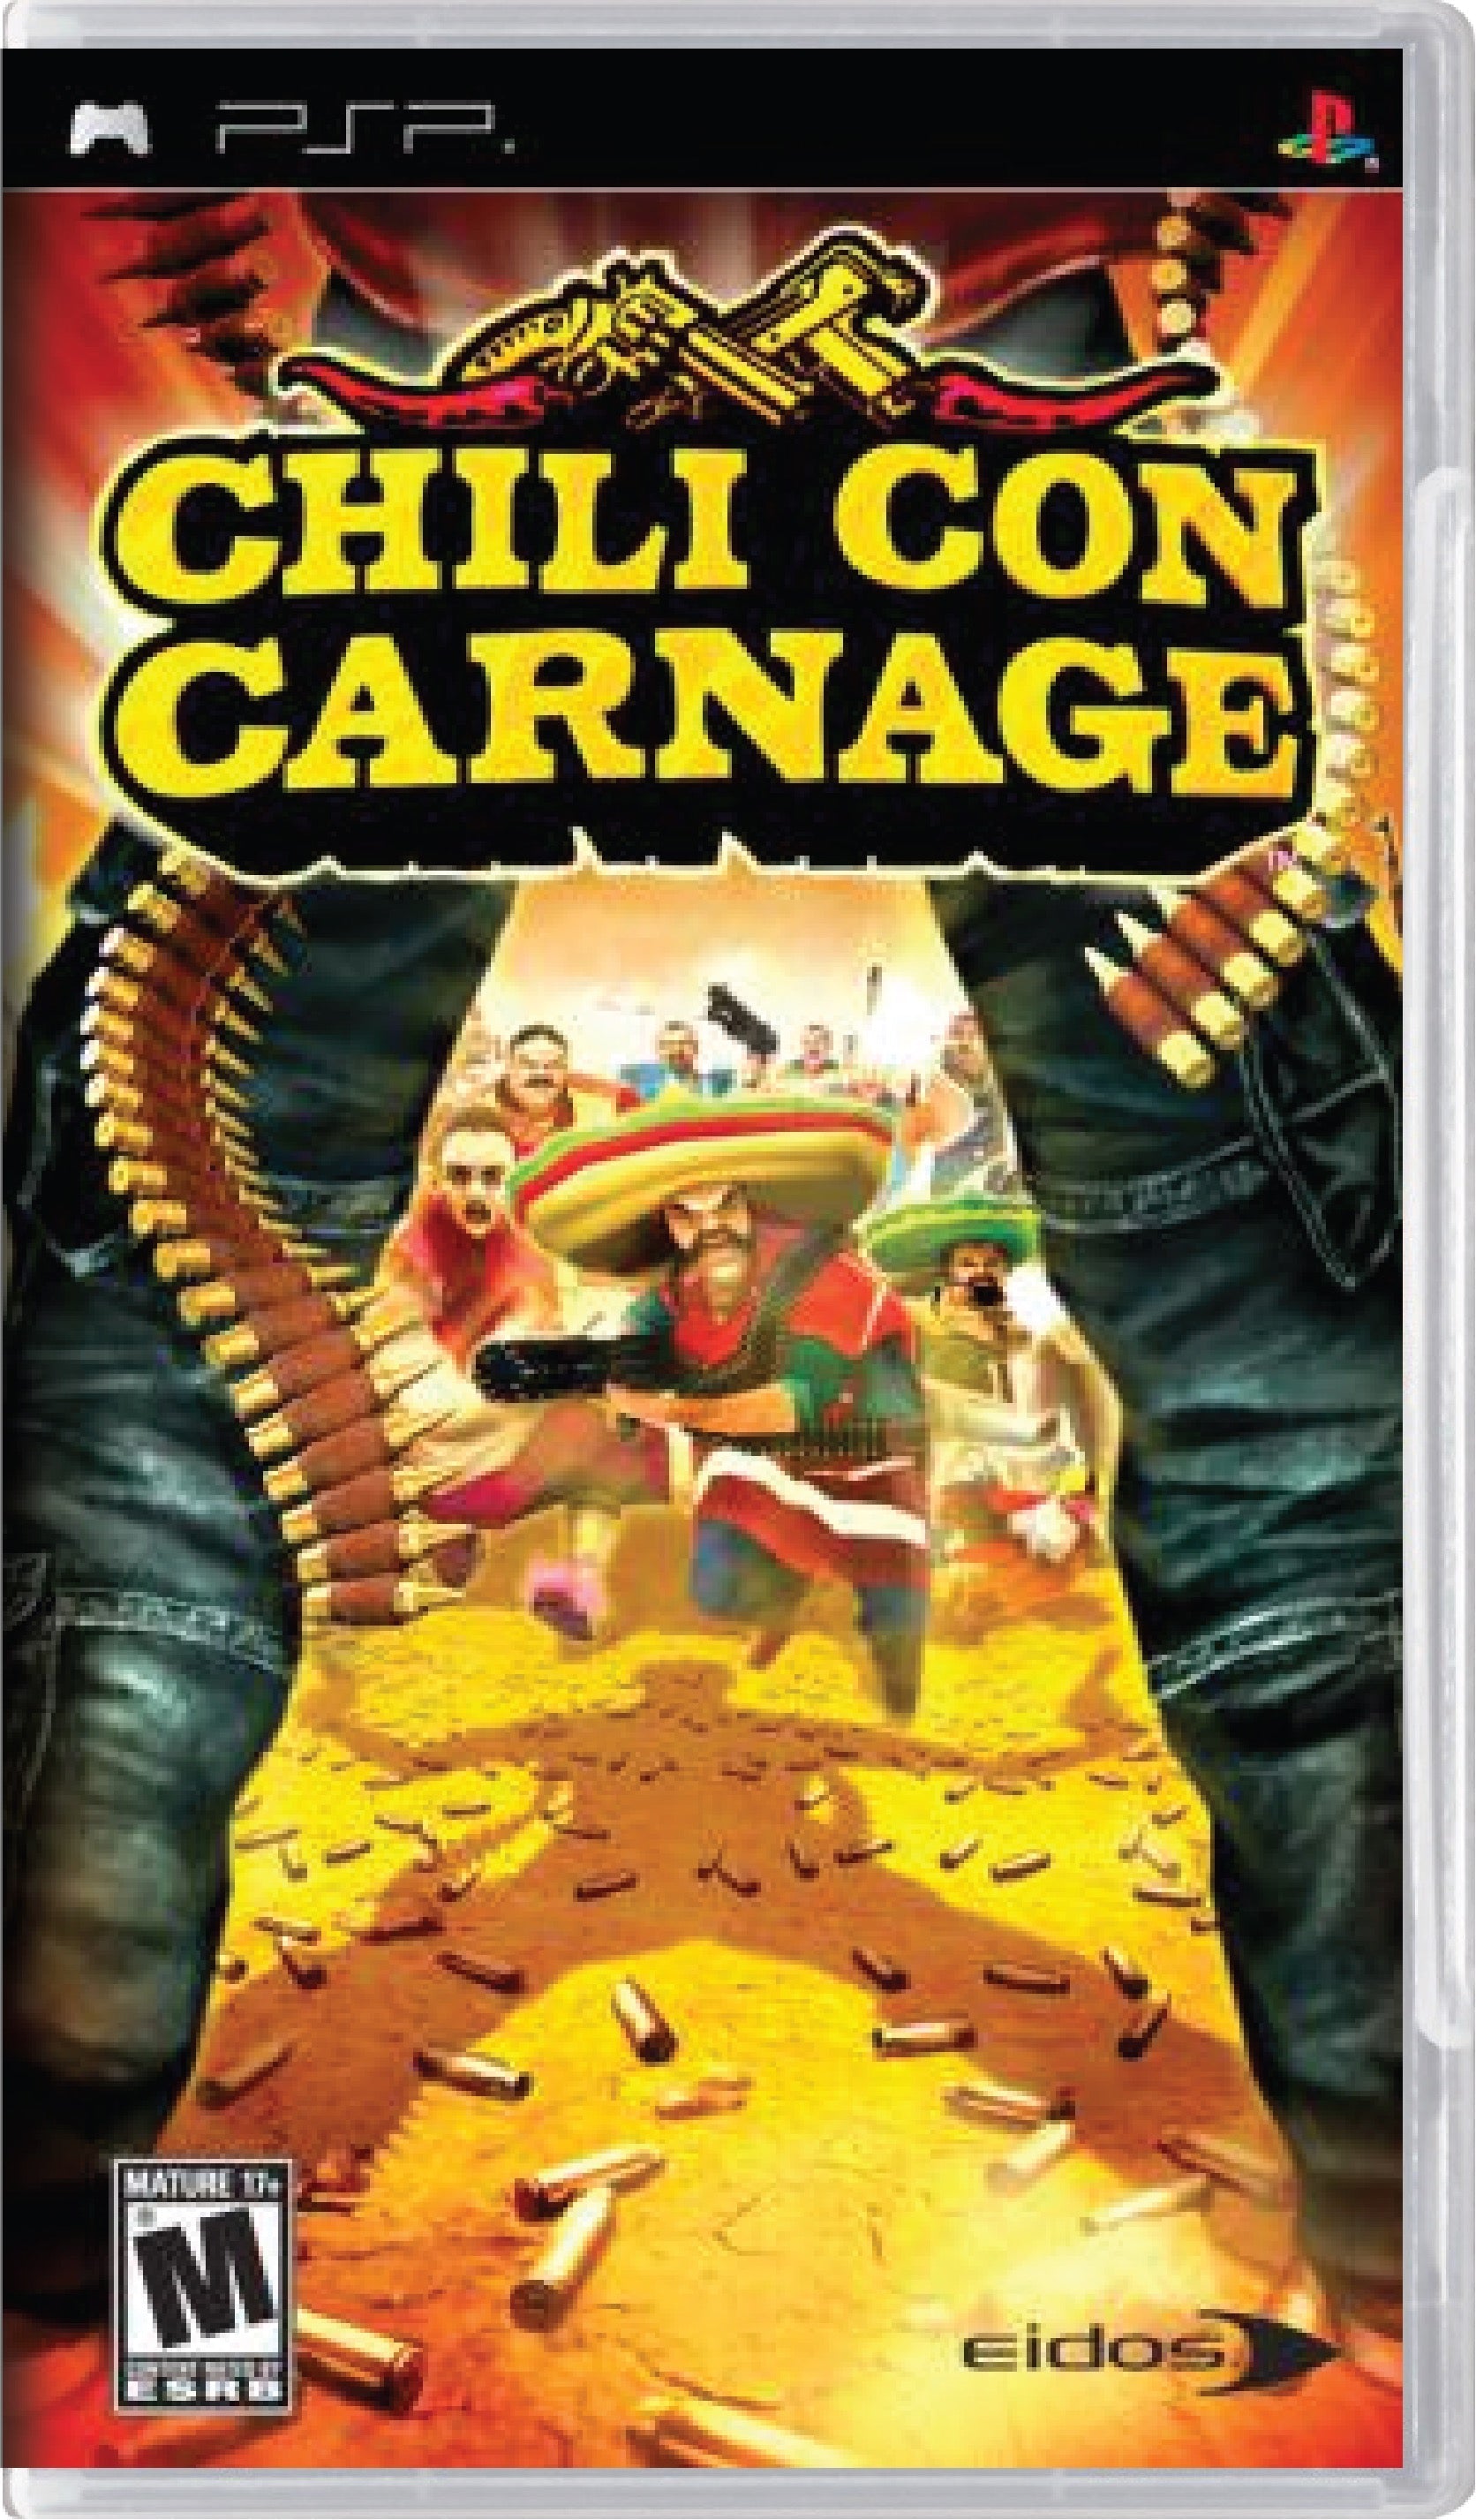 Chili Con Carnage Cover Art